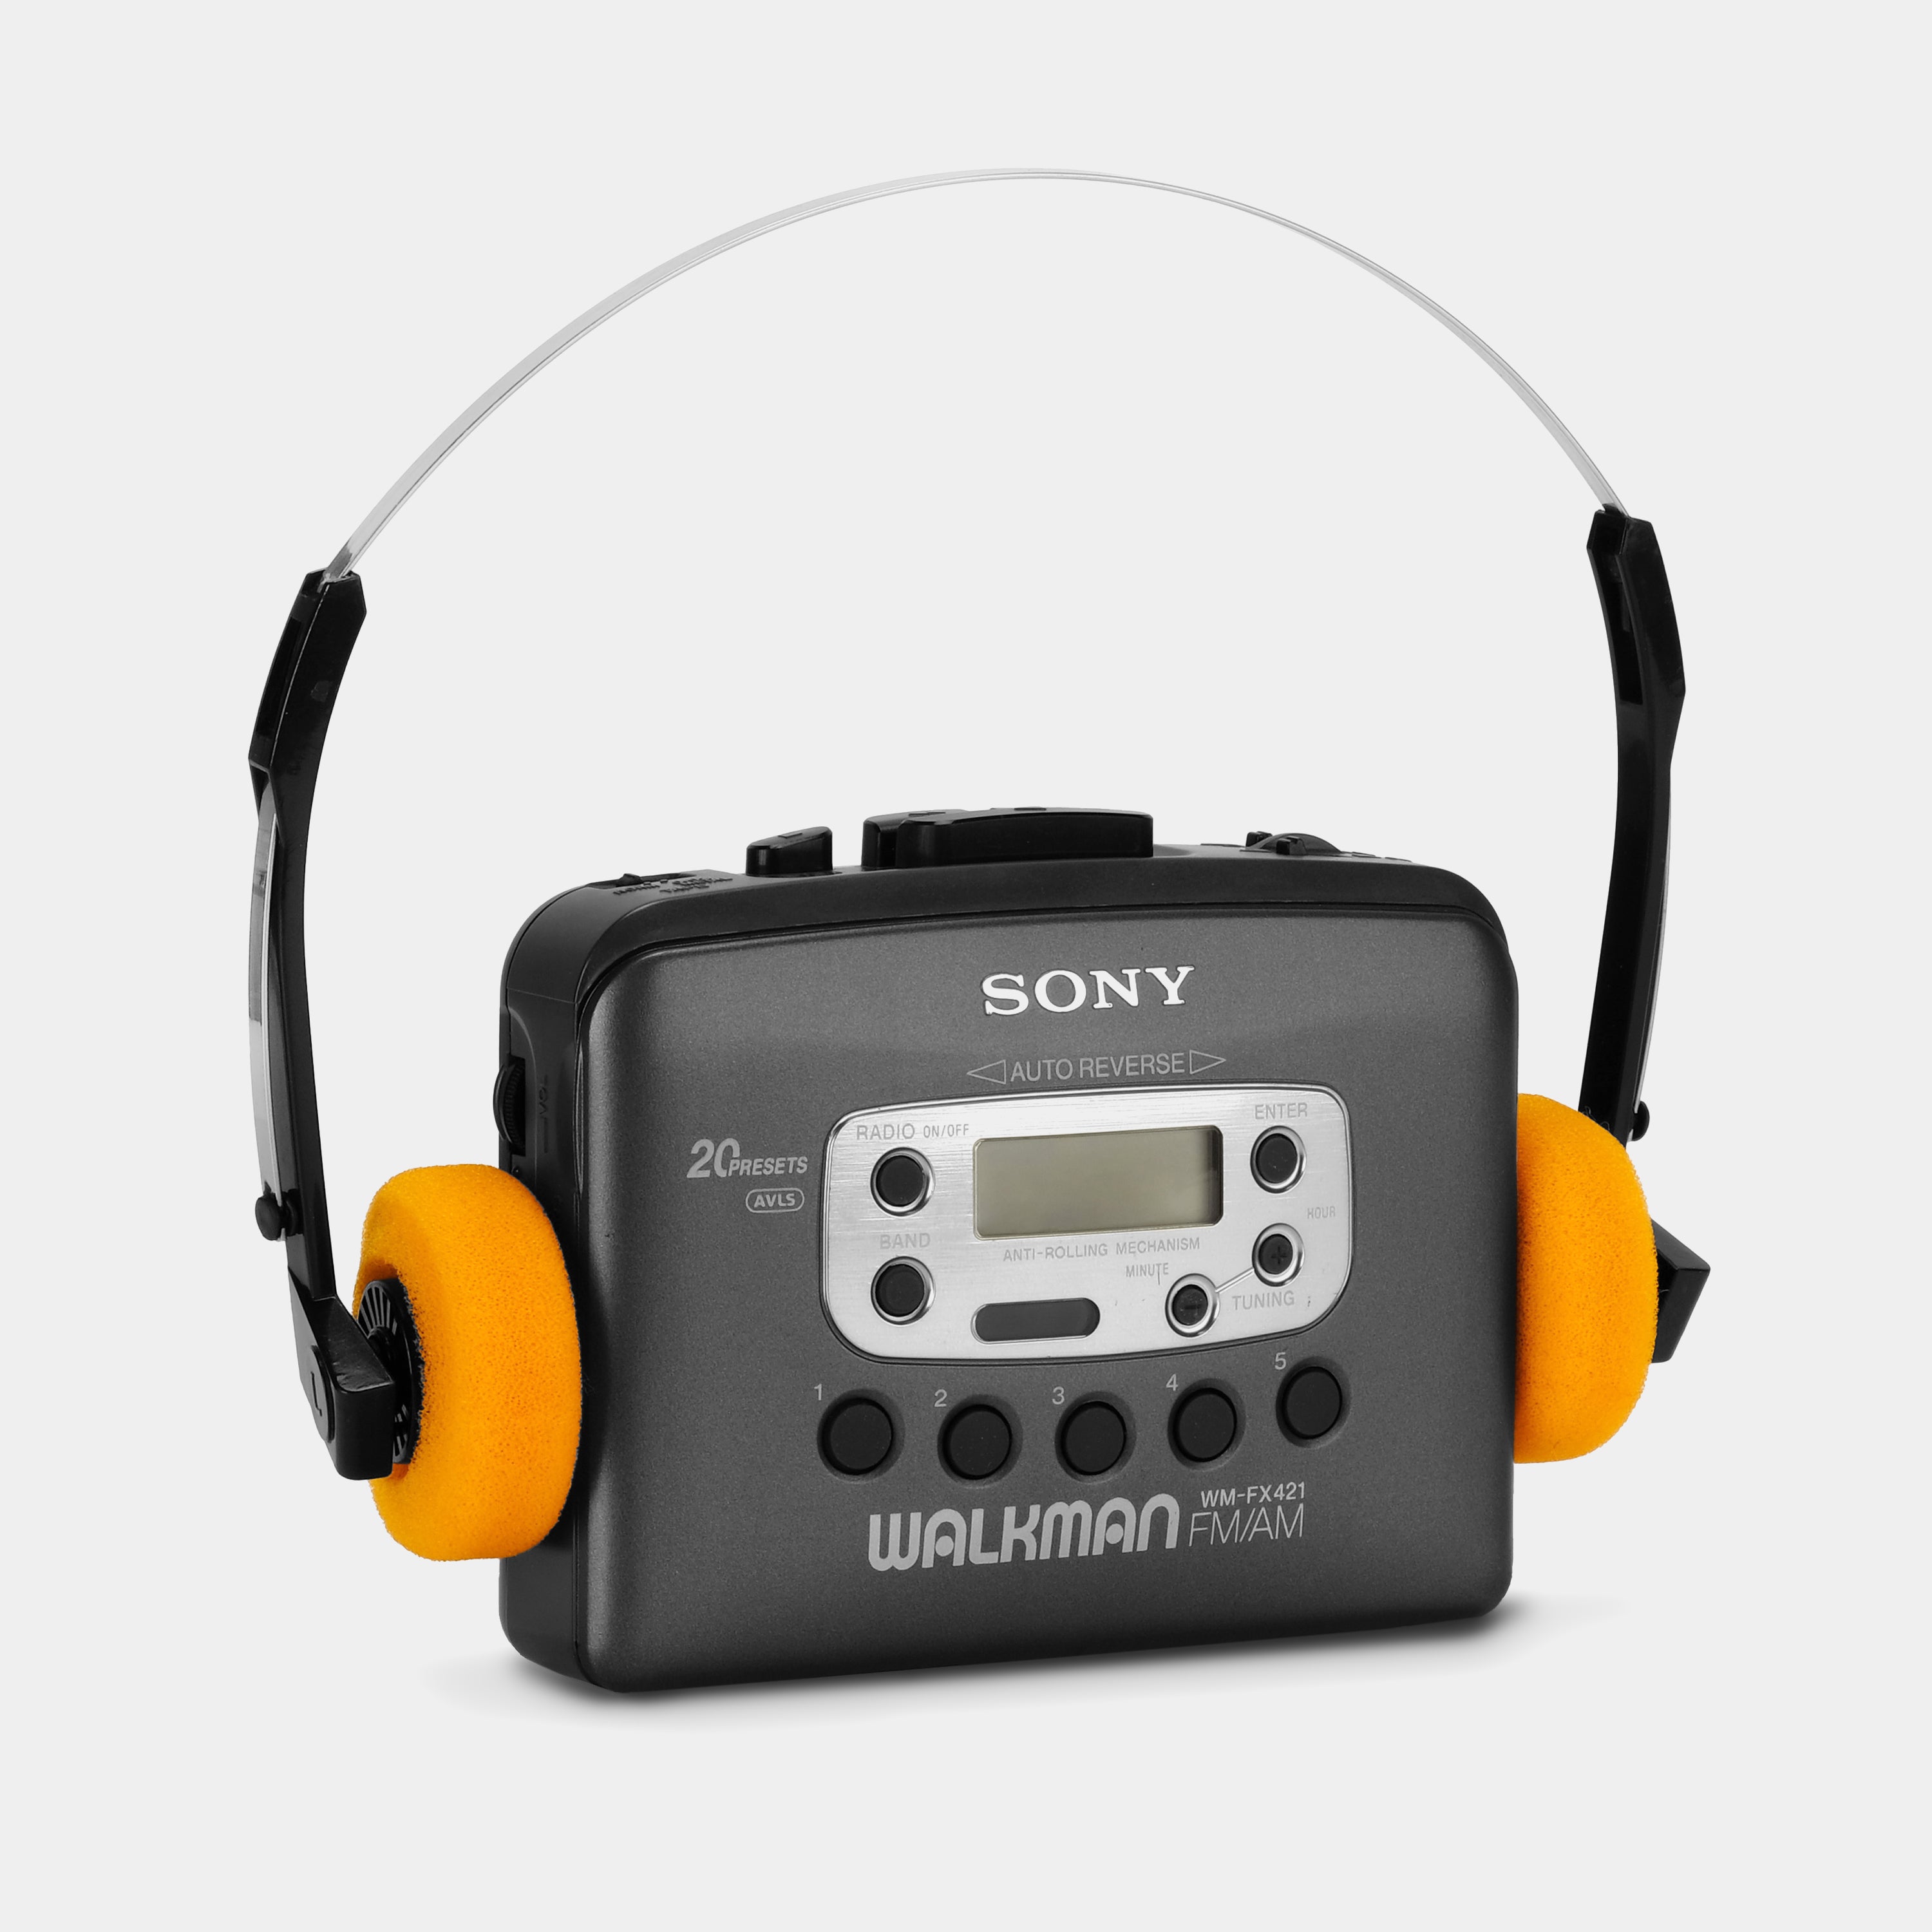 Sony Walkman WM-FX421 Auto Reverse AM/FM Portable Cassette Player